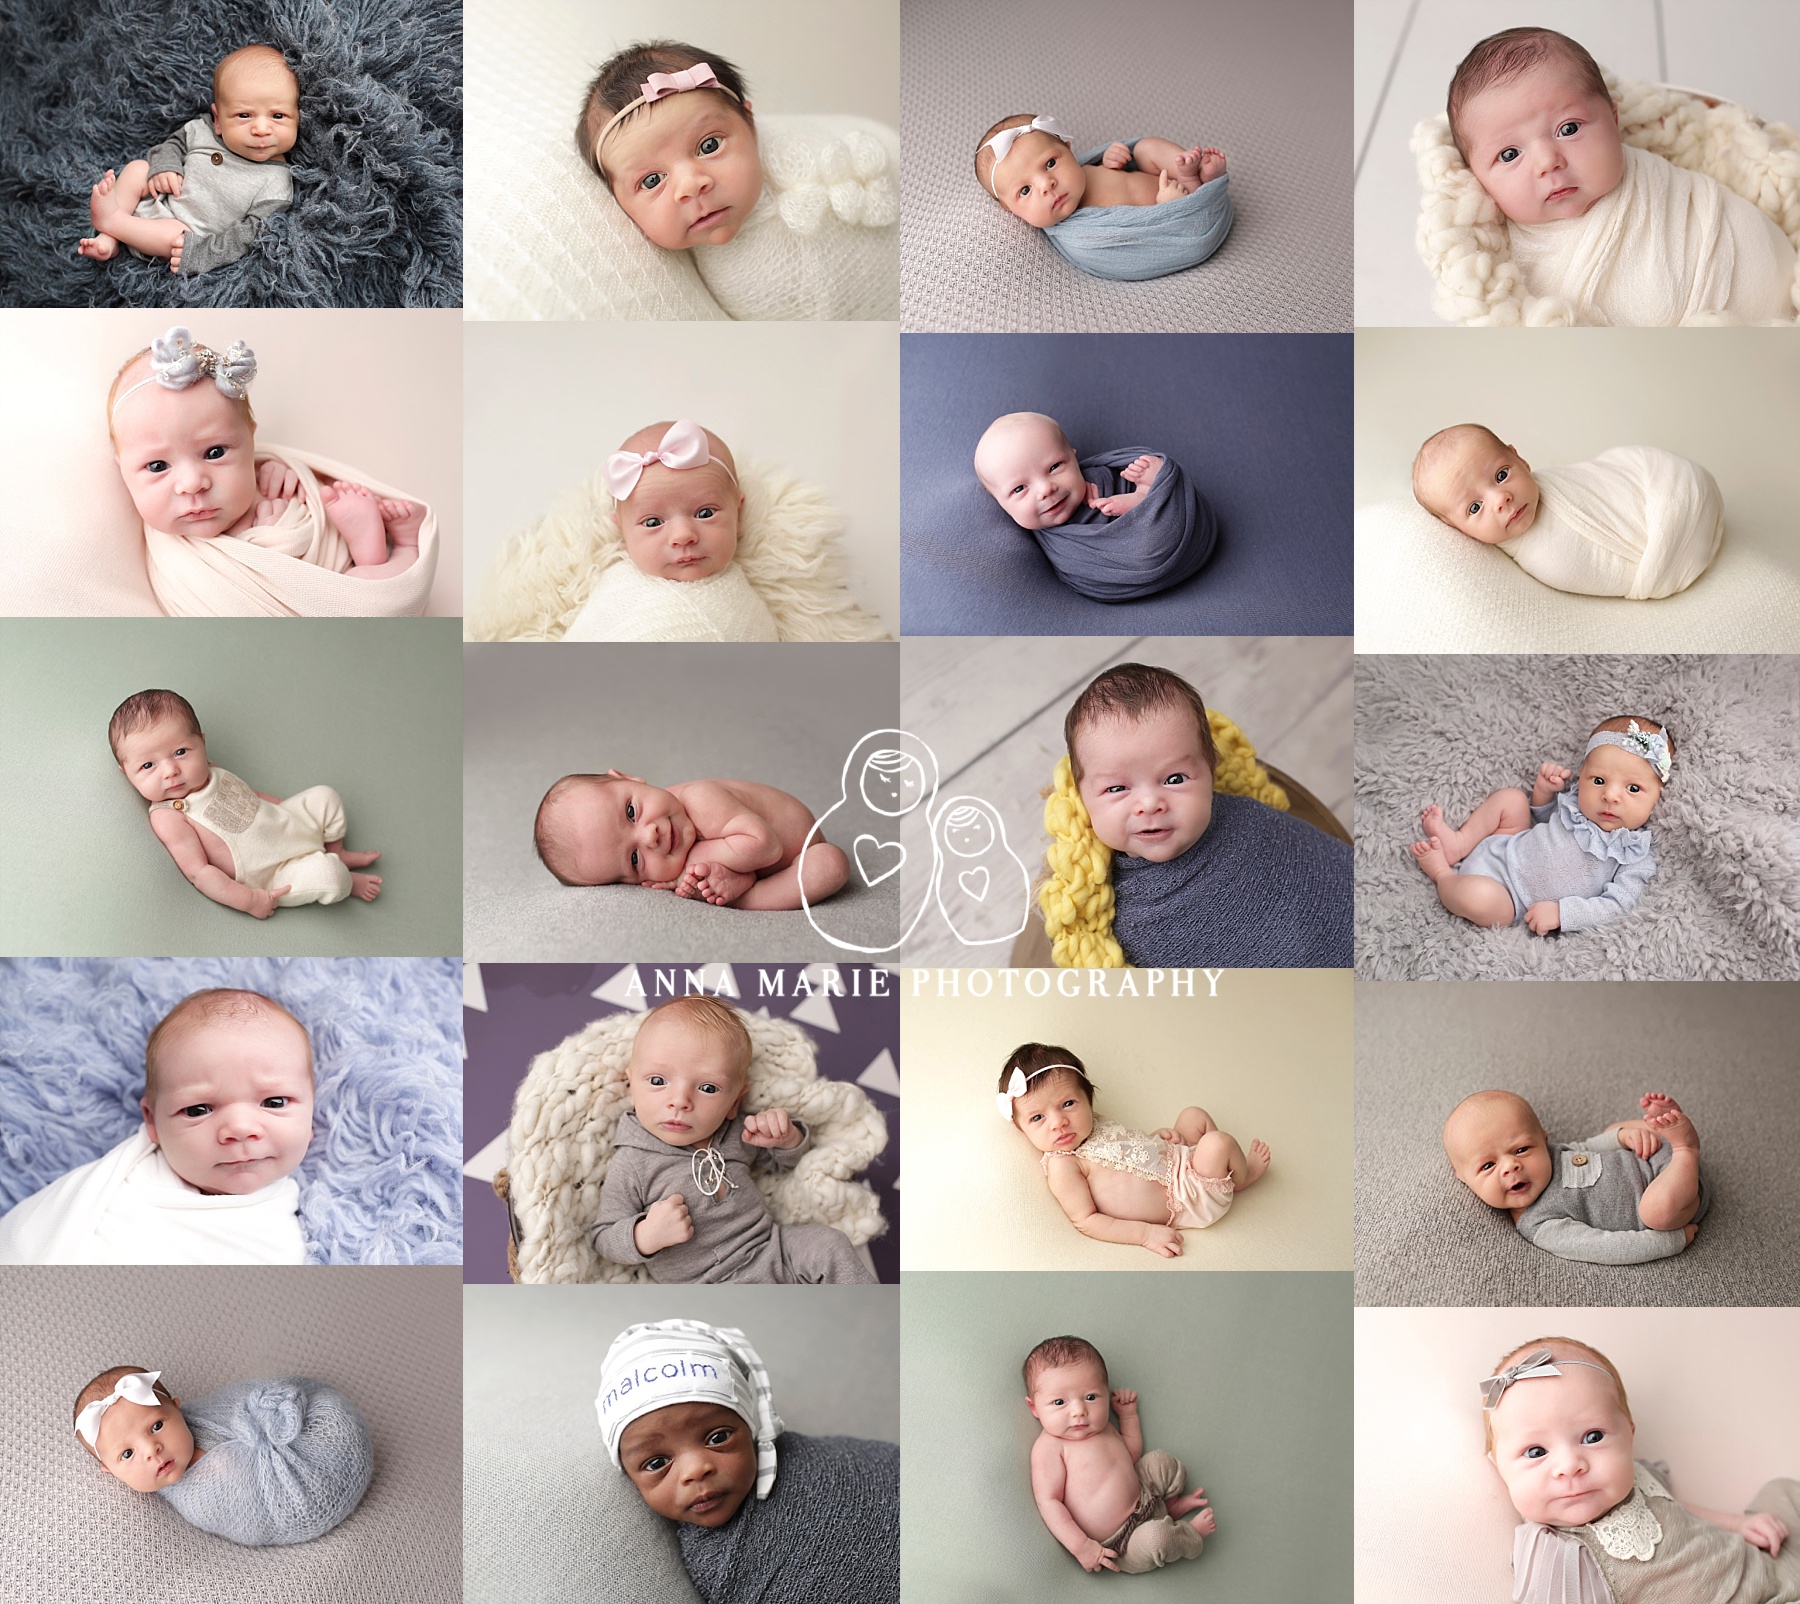 Collage of awake newborn babies